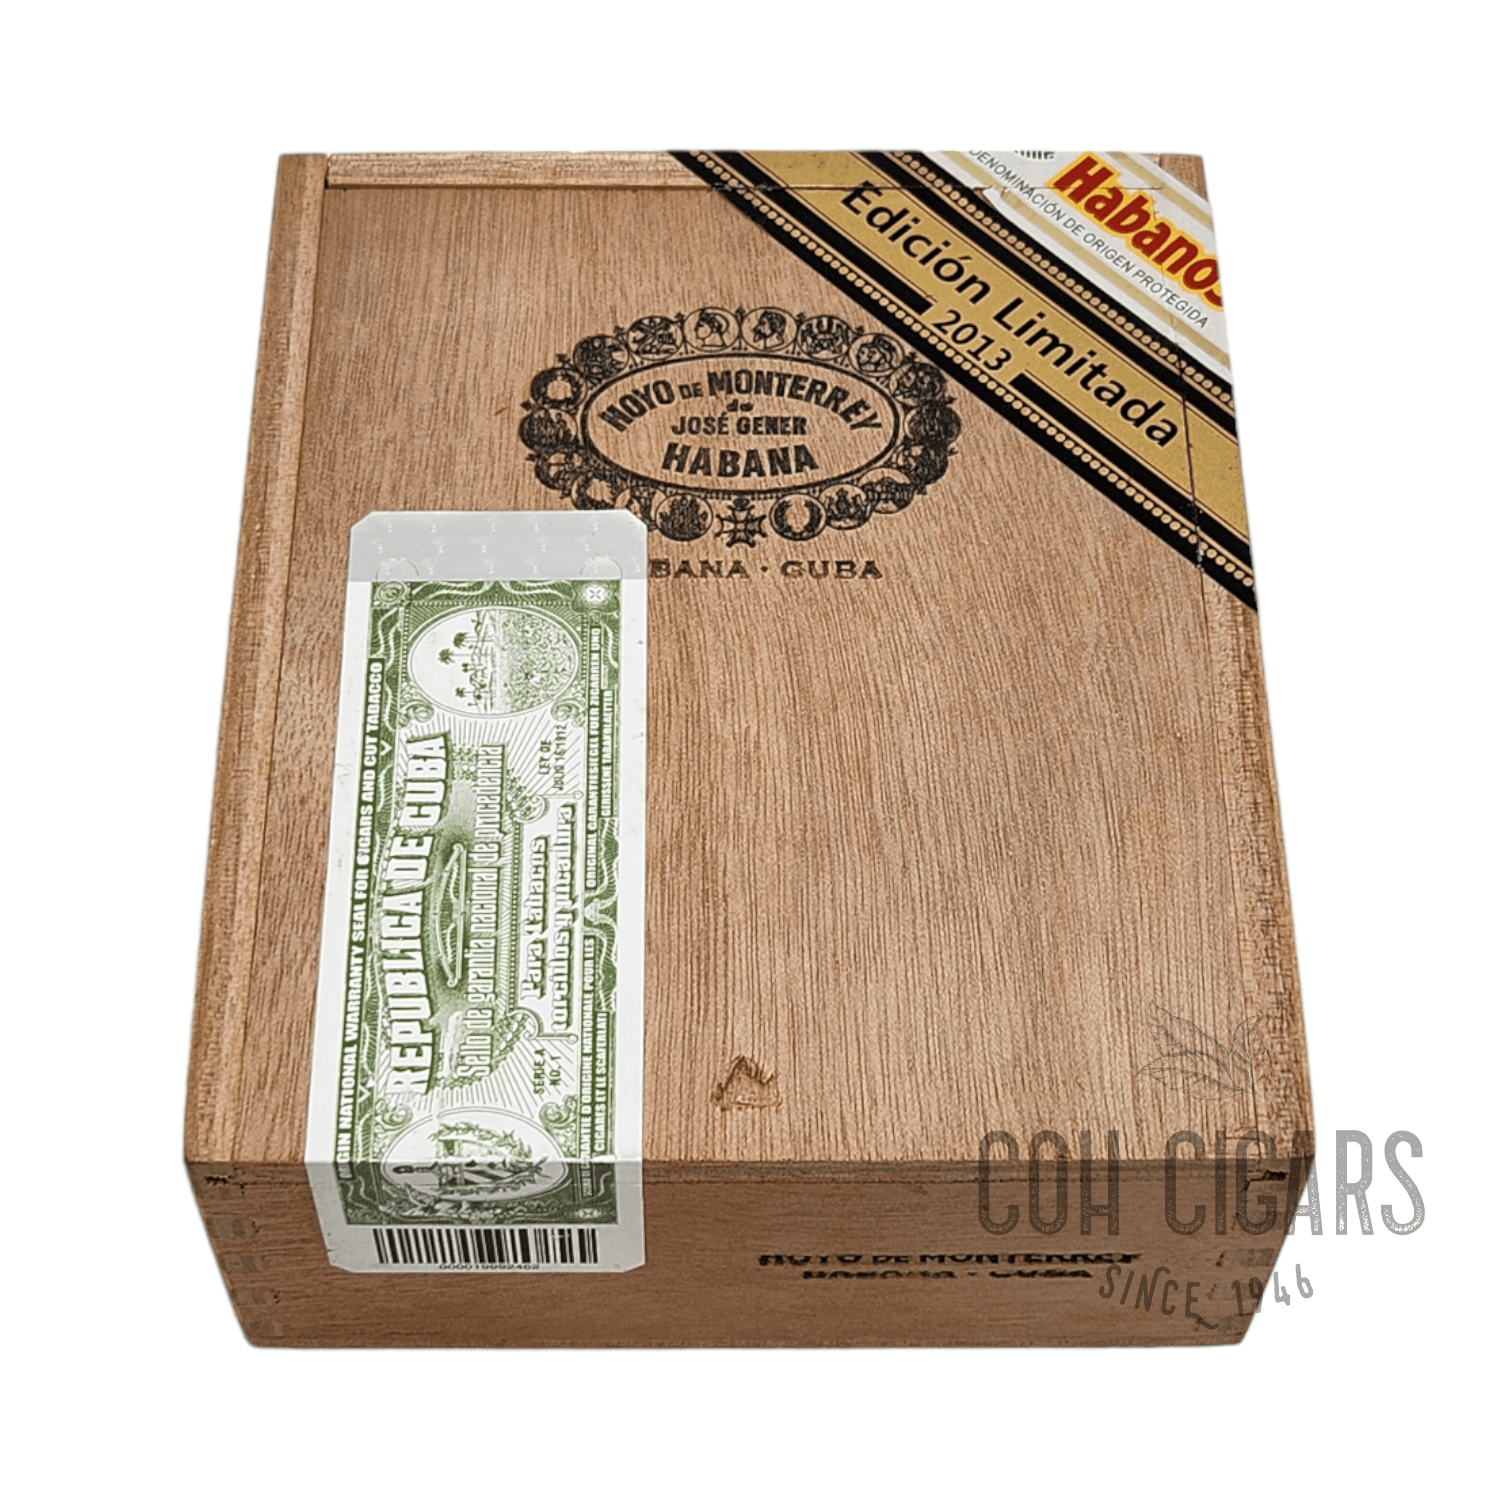 Hoyo de Monterrey Cigar | Grand Epicure Edition Limitada 2013 | Box 10 - hk.cohcigars